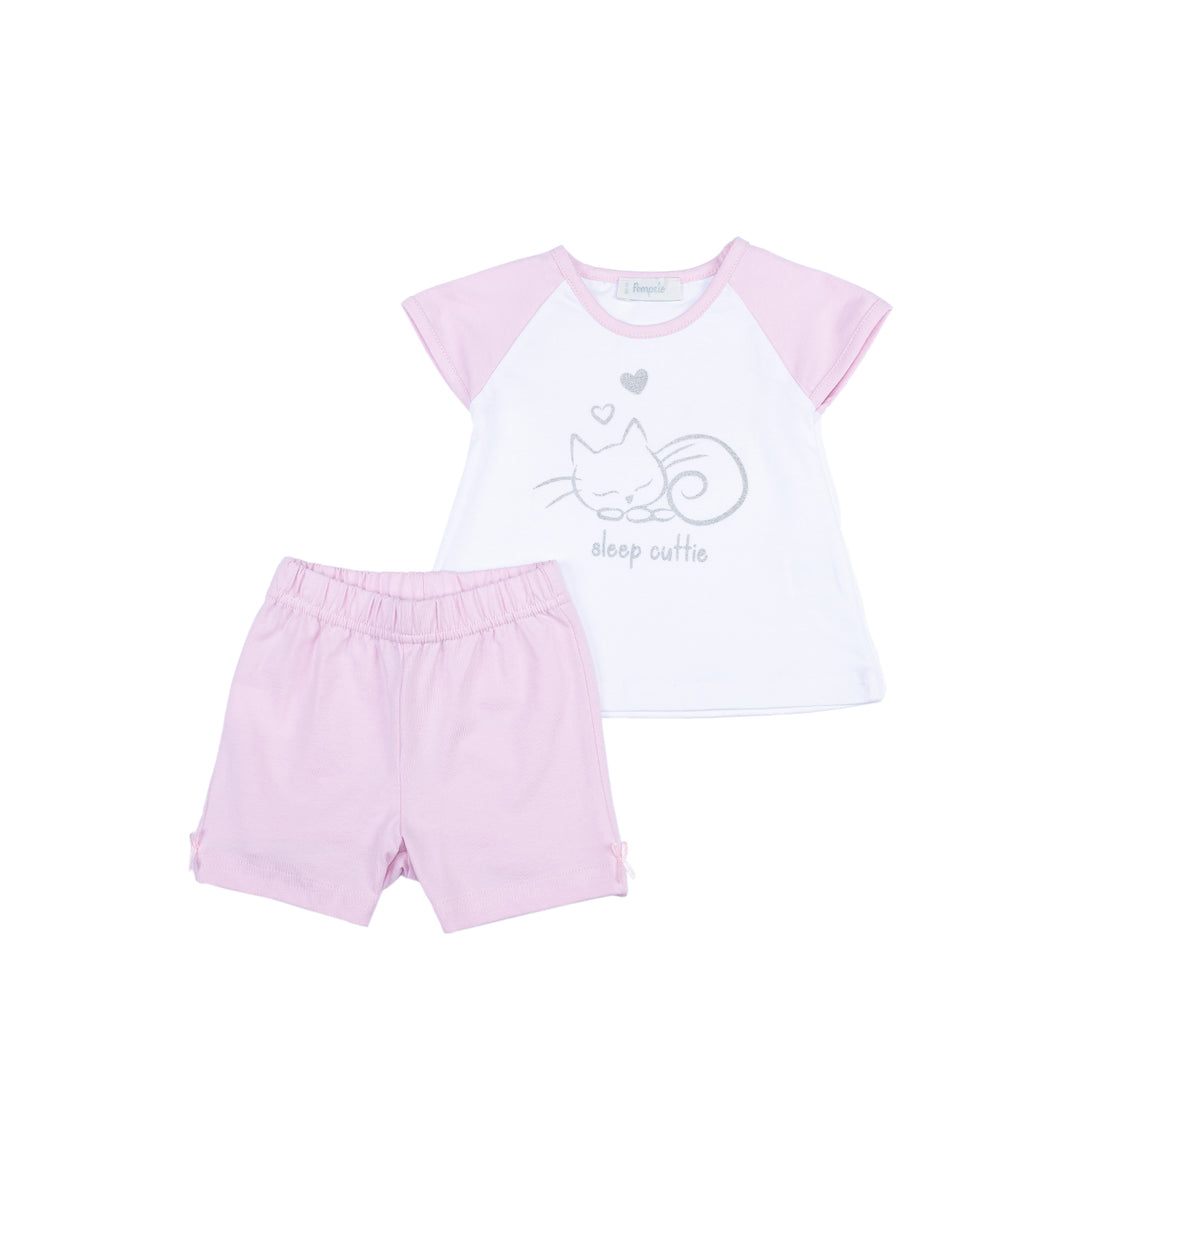 Soft comfy baby girl pyjama set by Pompelo